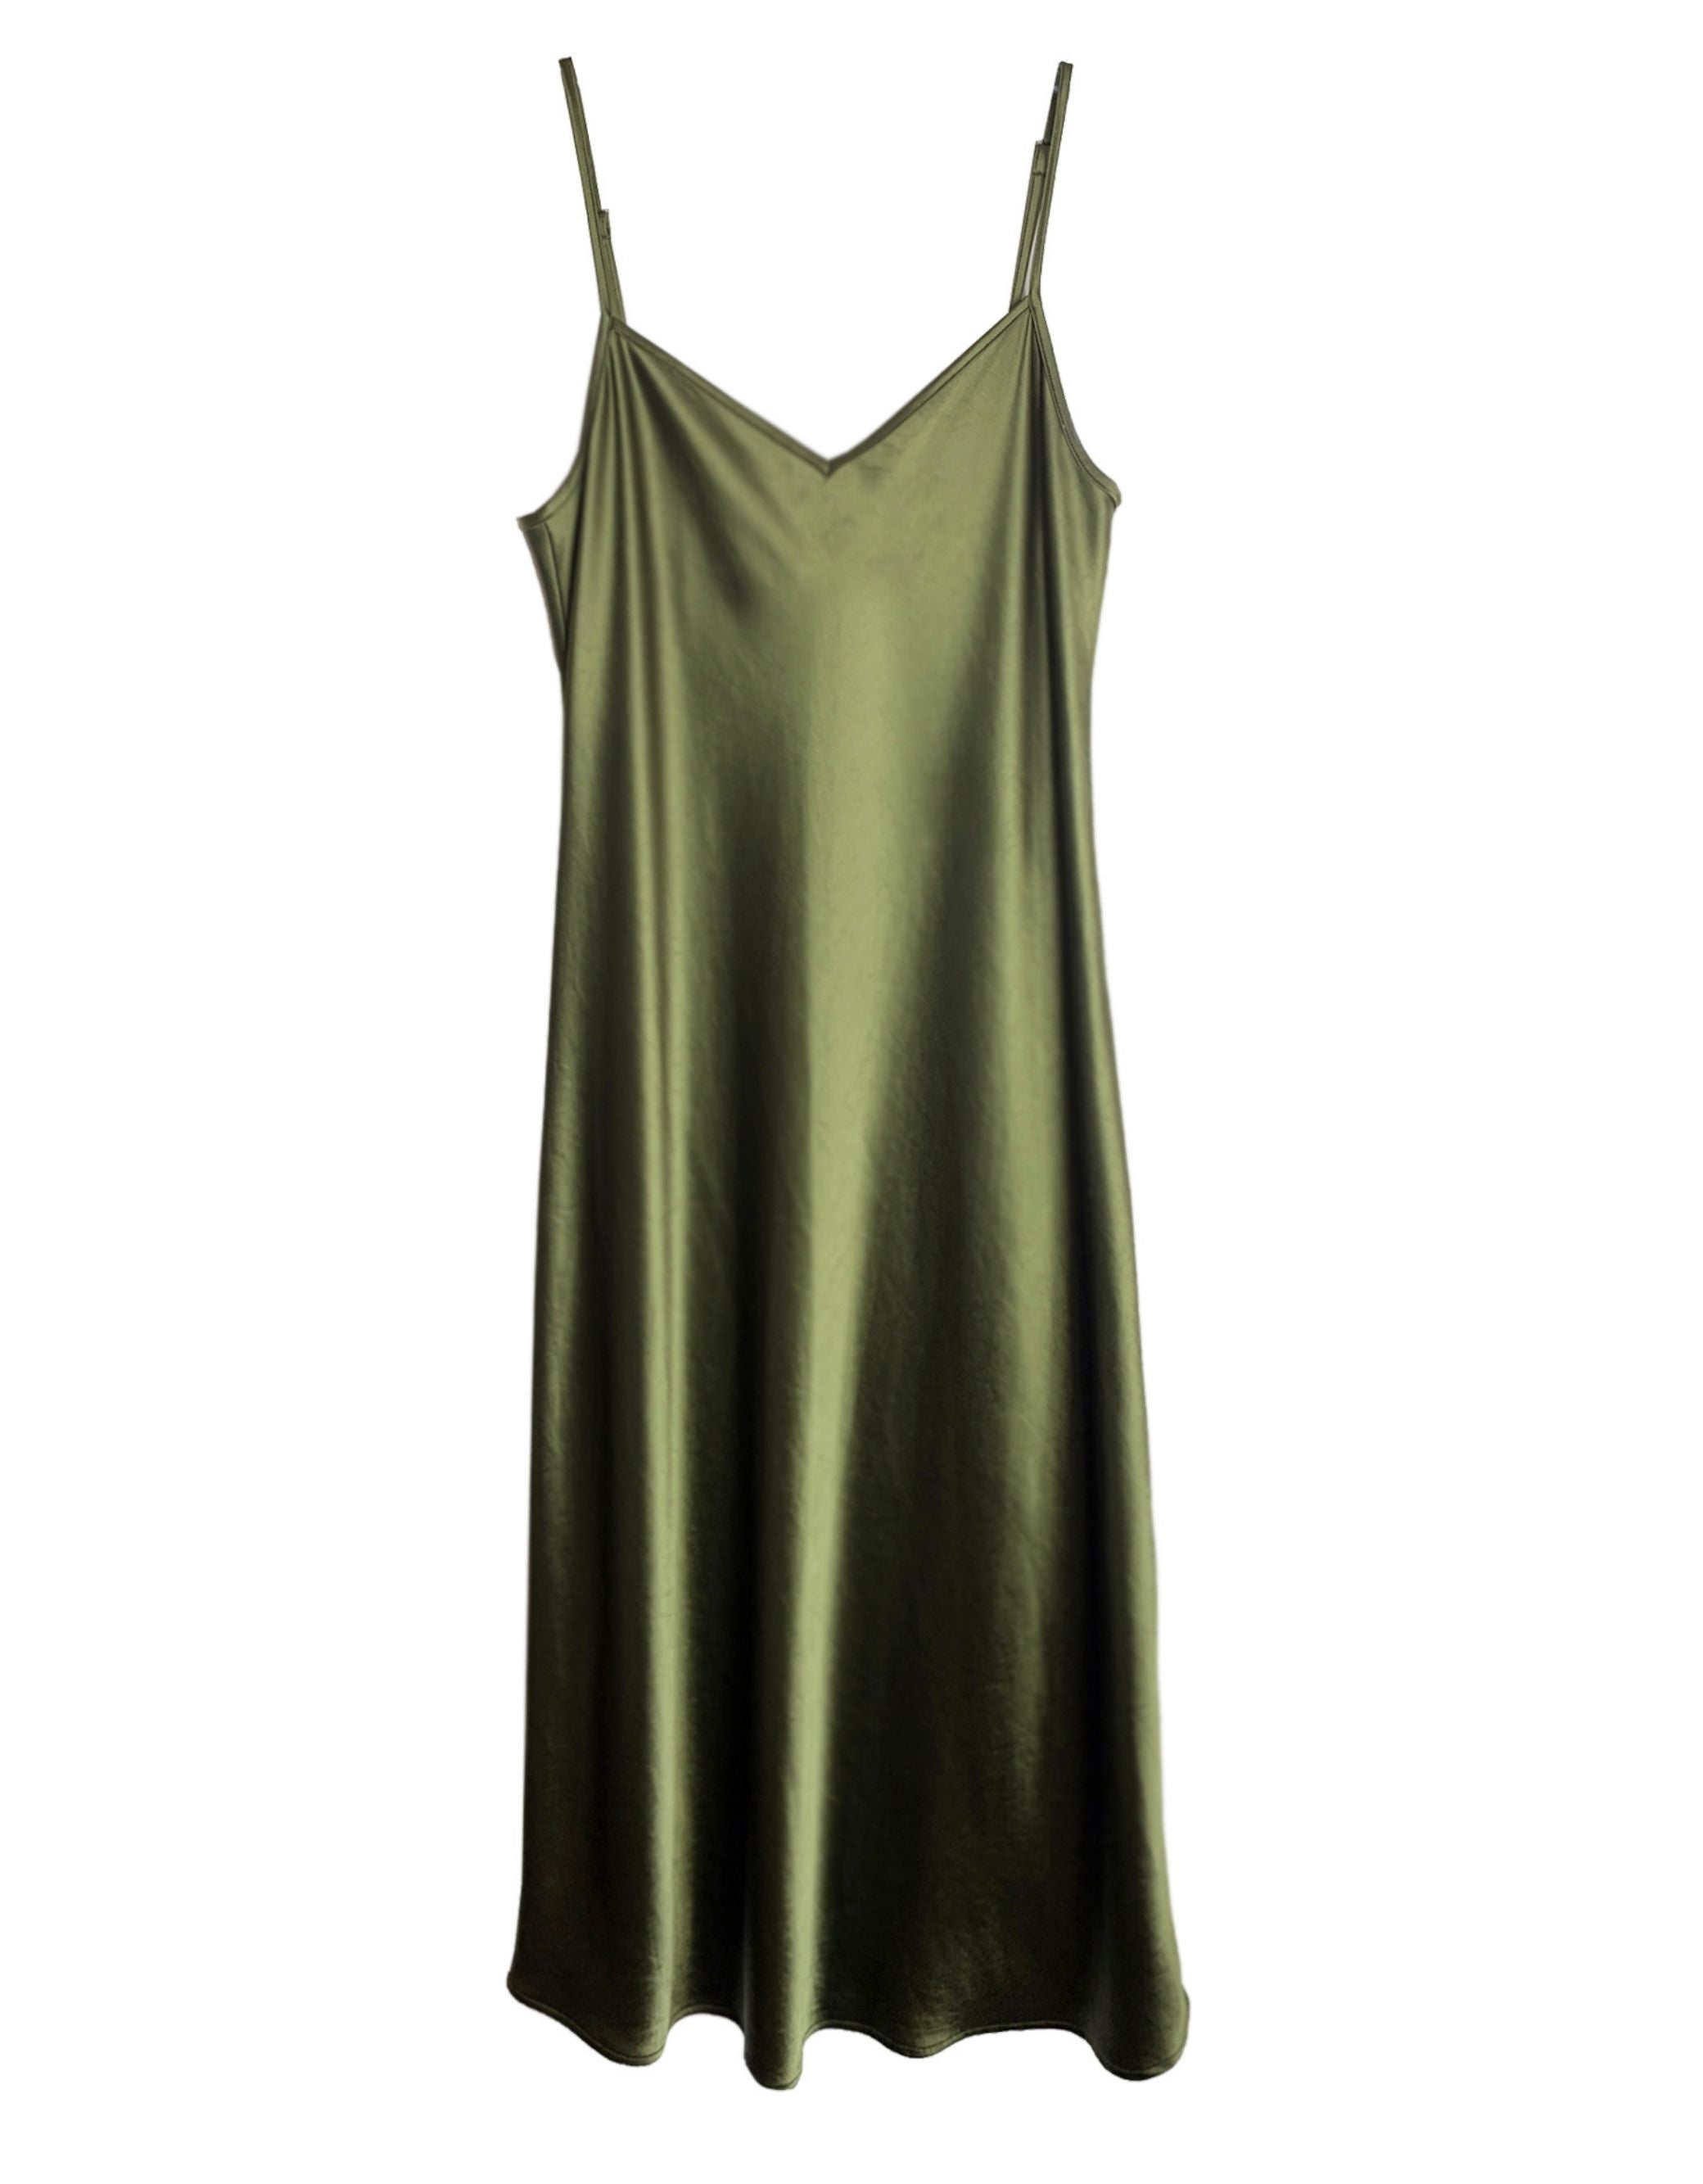 Cabaret Bias Slip Dress in Olive